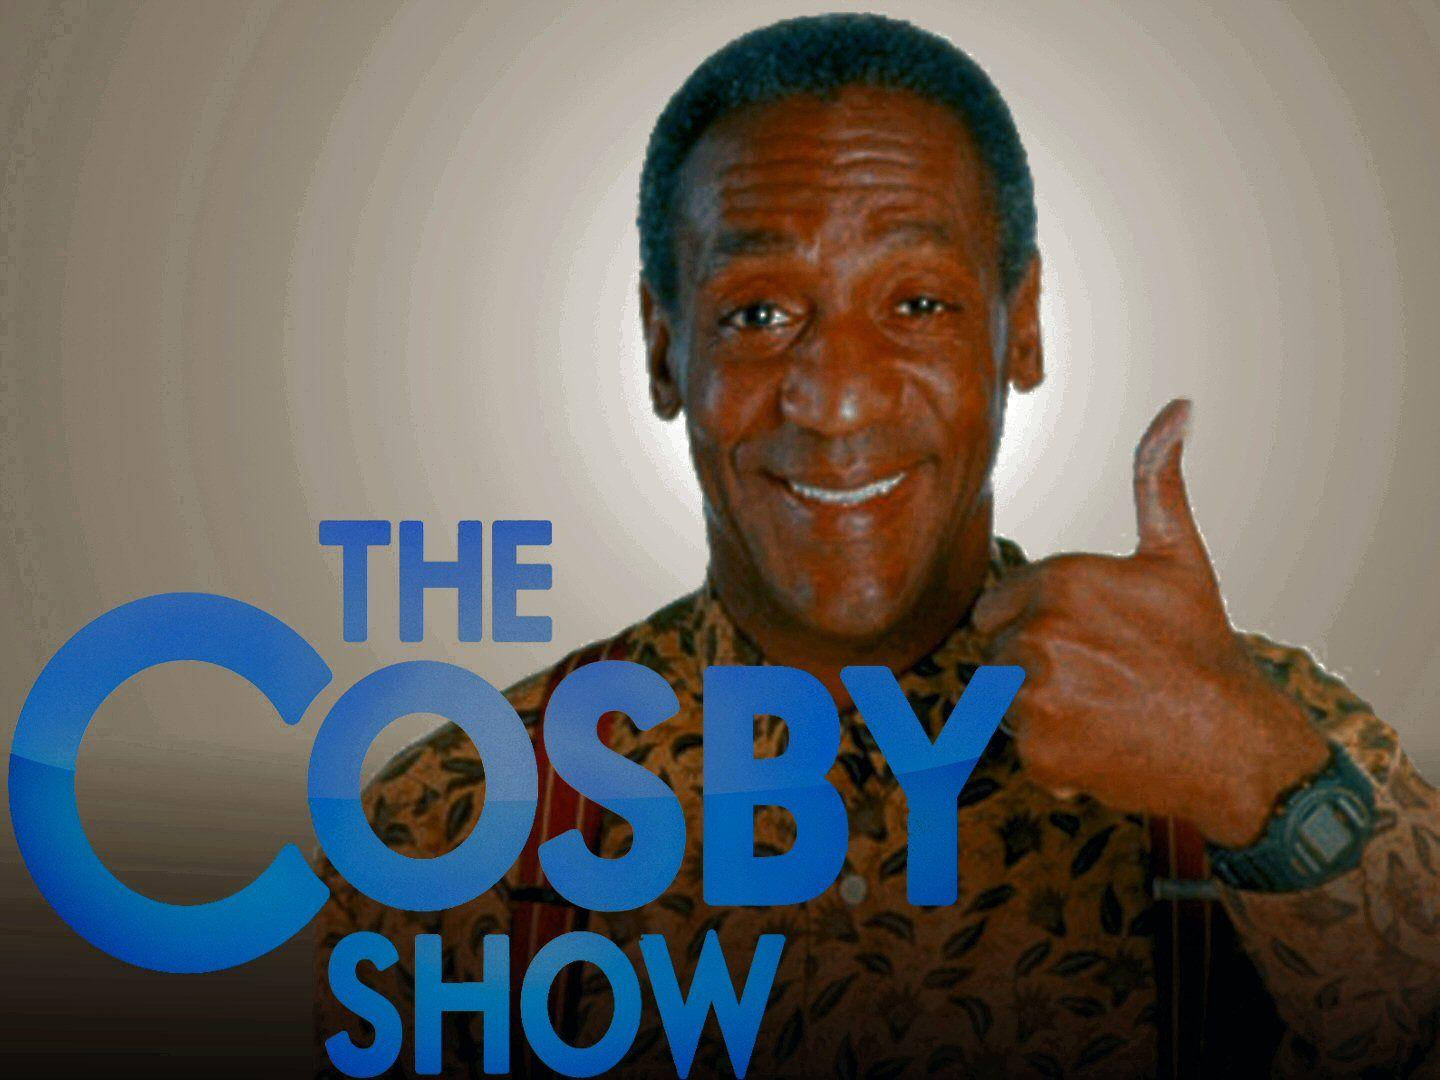 Billcosby Die Bill Cosby Show Wallpaper